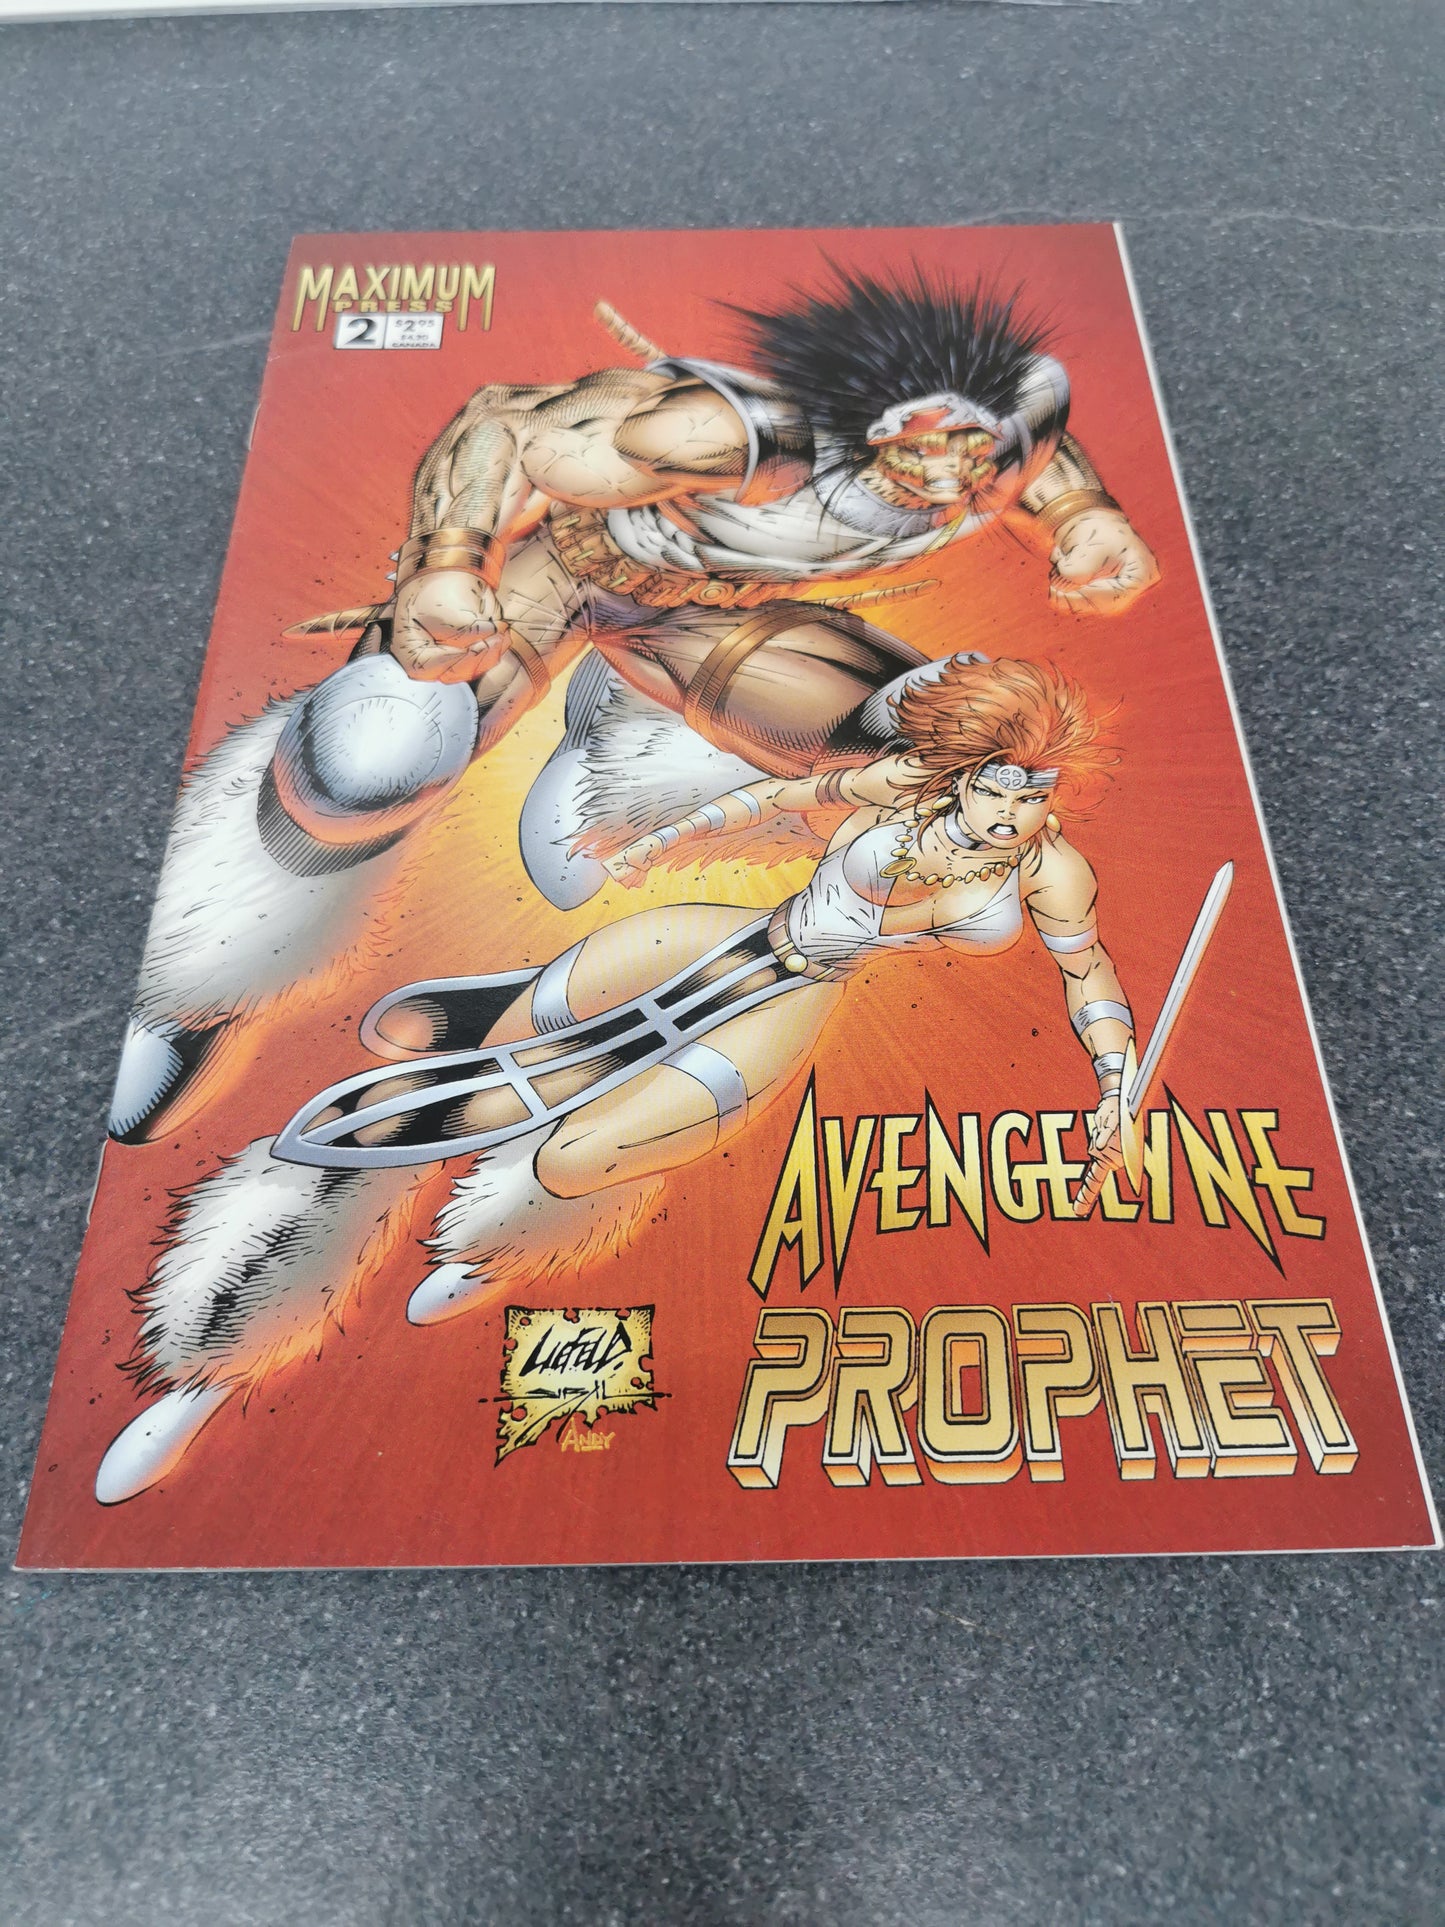 Avengelyne Prophet #2 1997 Maximum Press comic